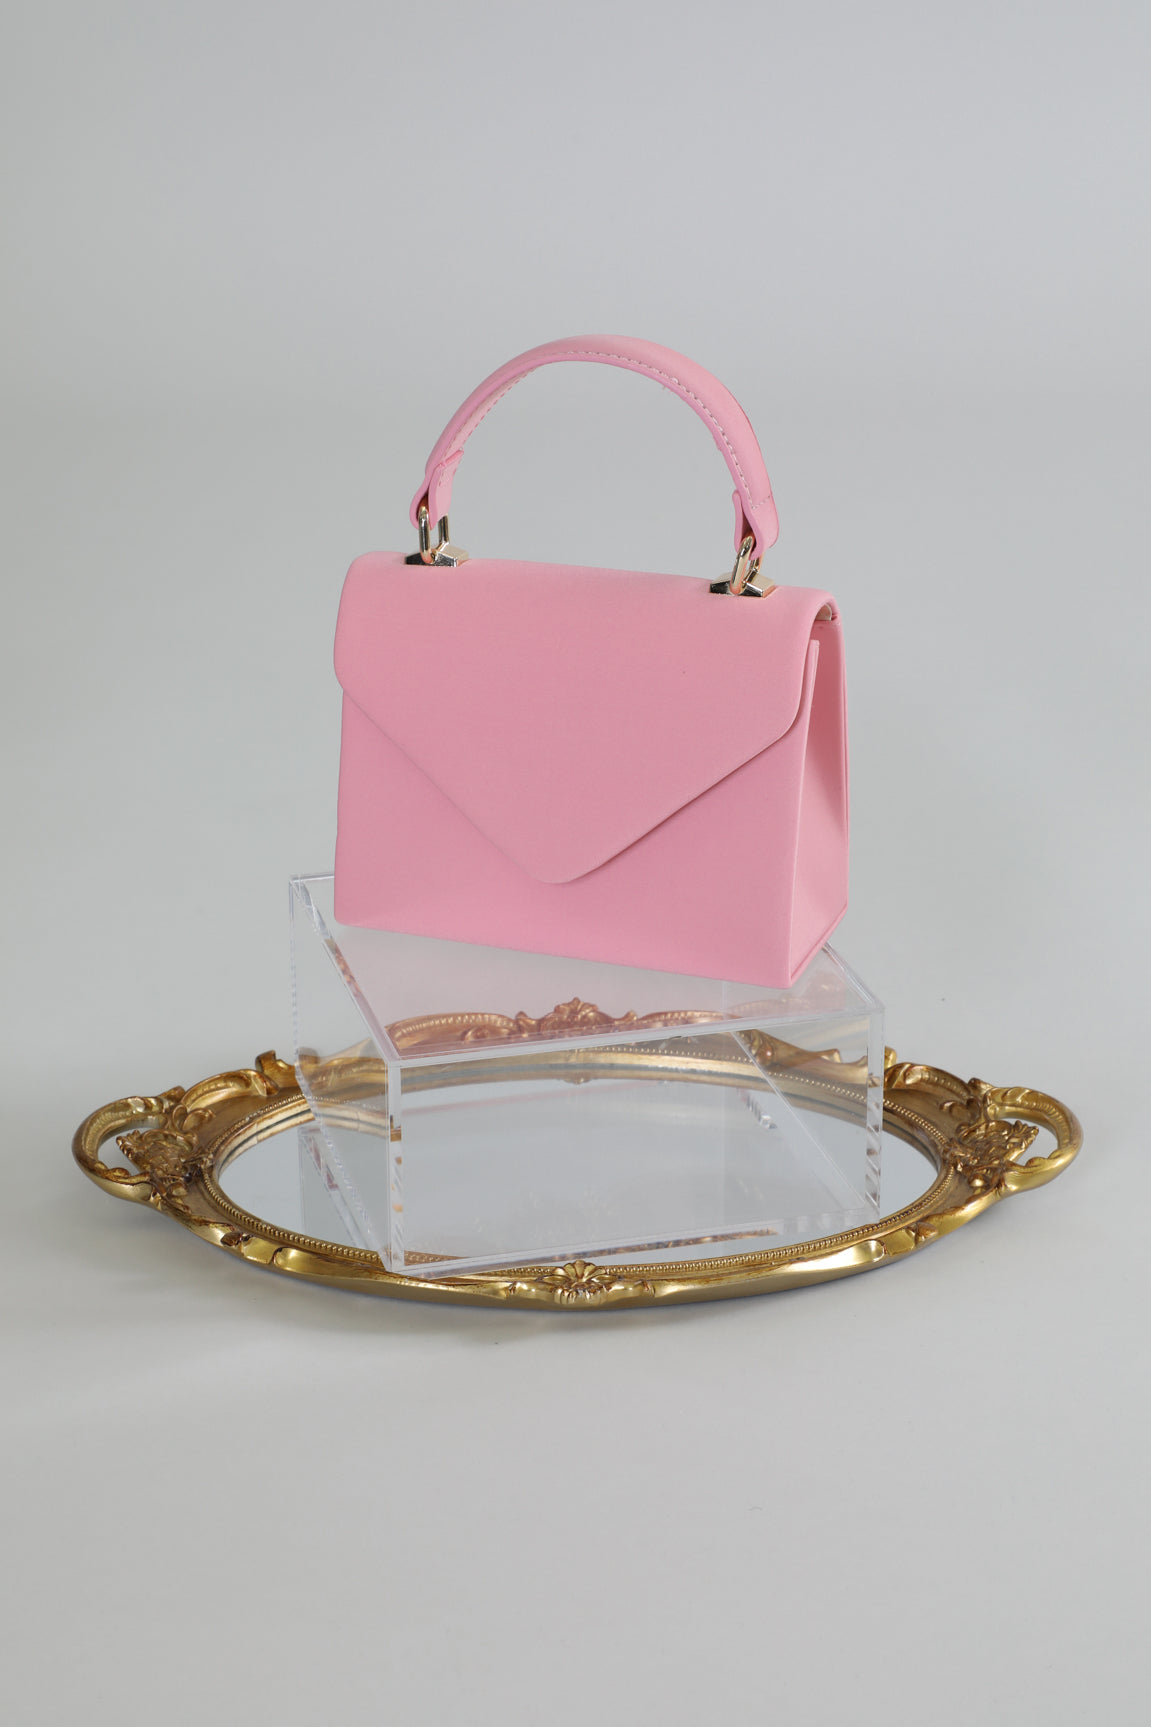 Rare Beauty Handbag